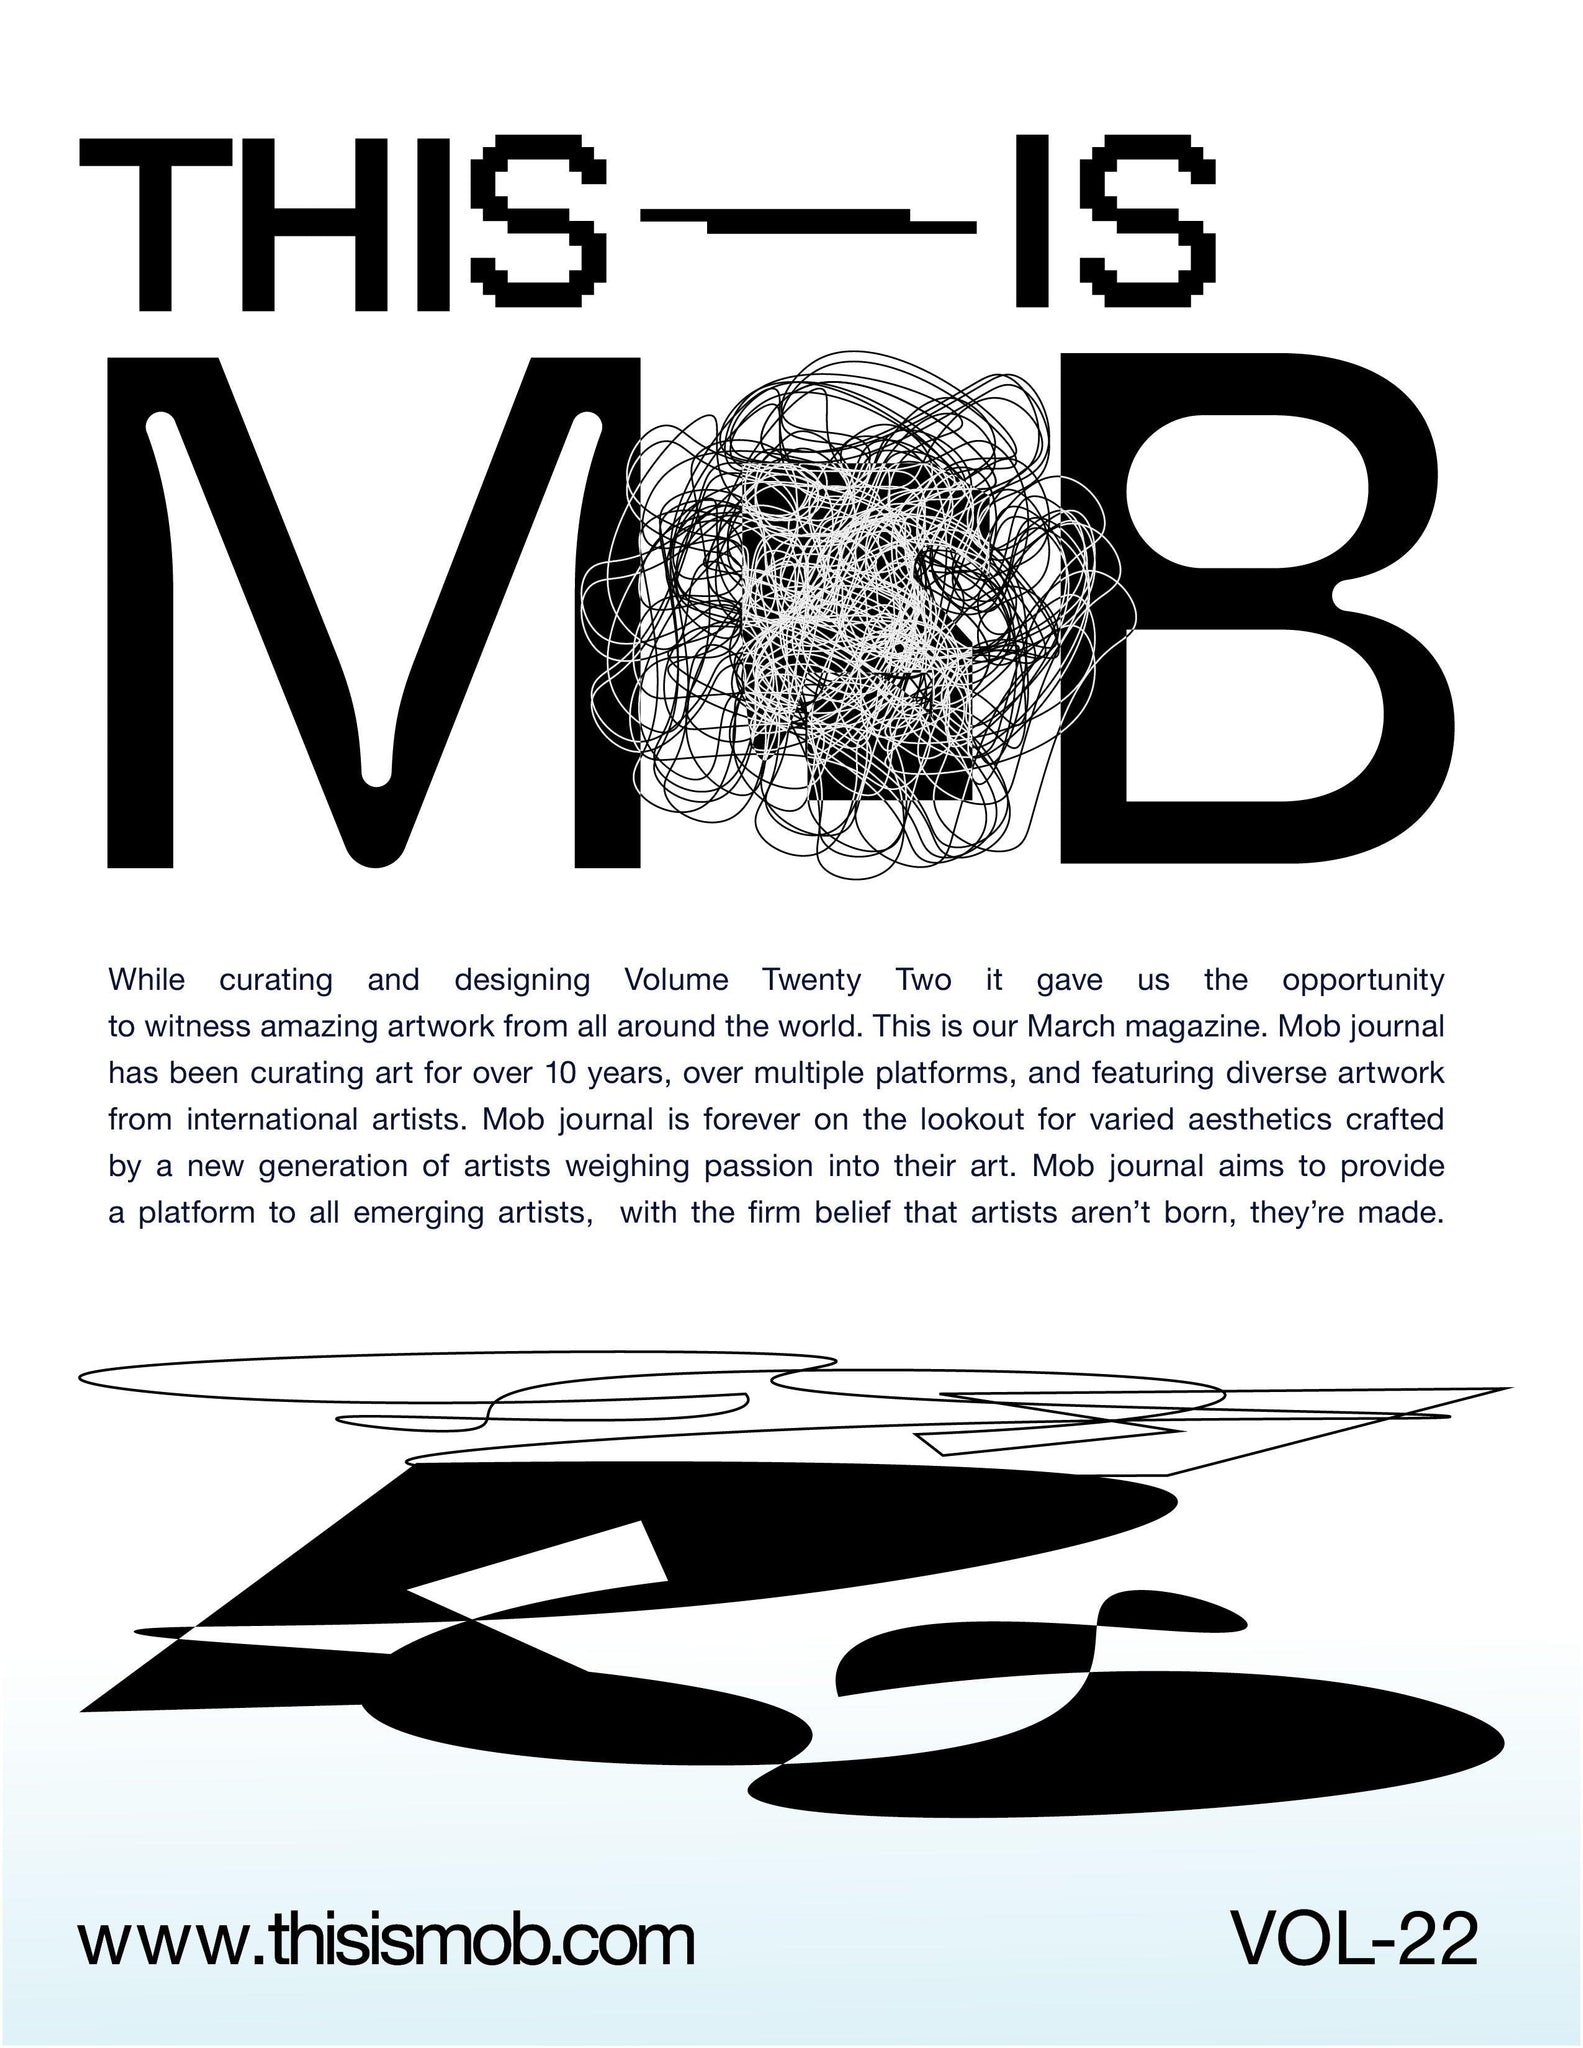 MOB JOURNAL | VOLUME TWENTY TWO | ISSUE #74 - Mob Journal